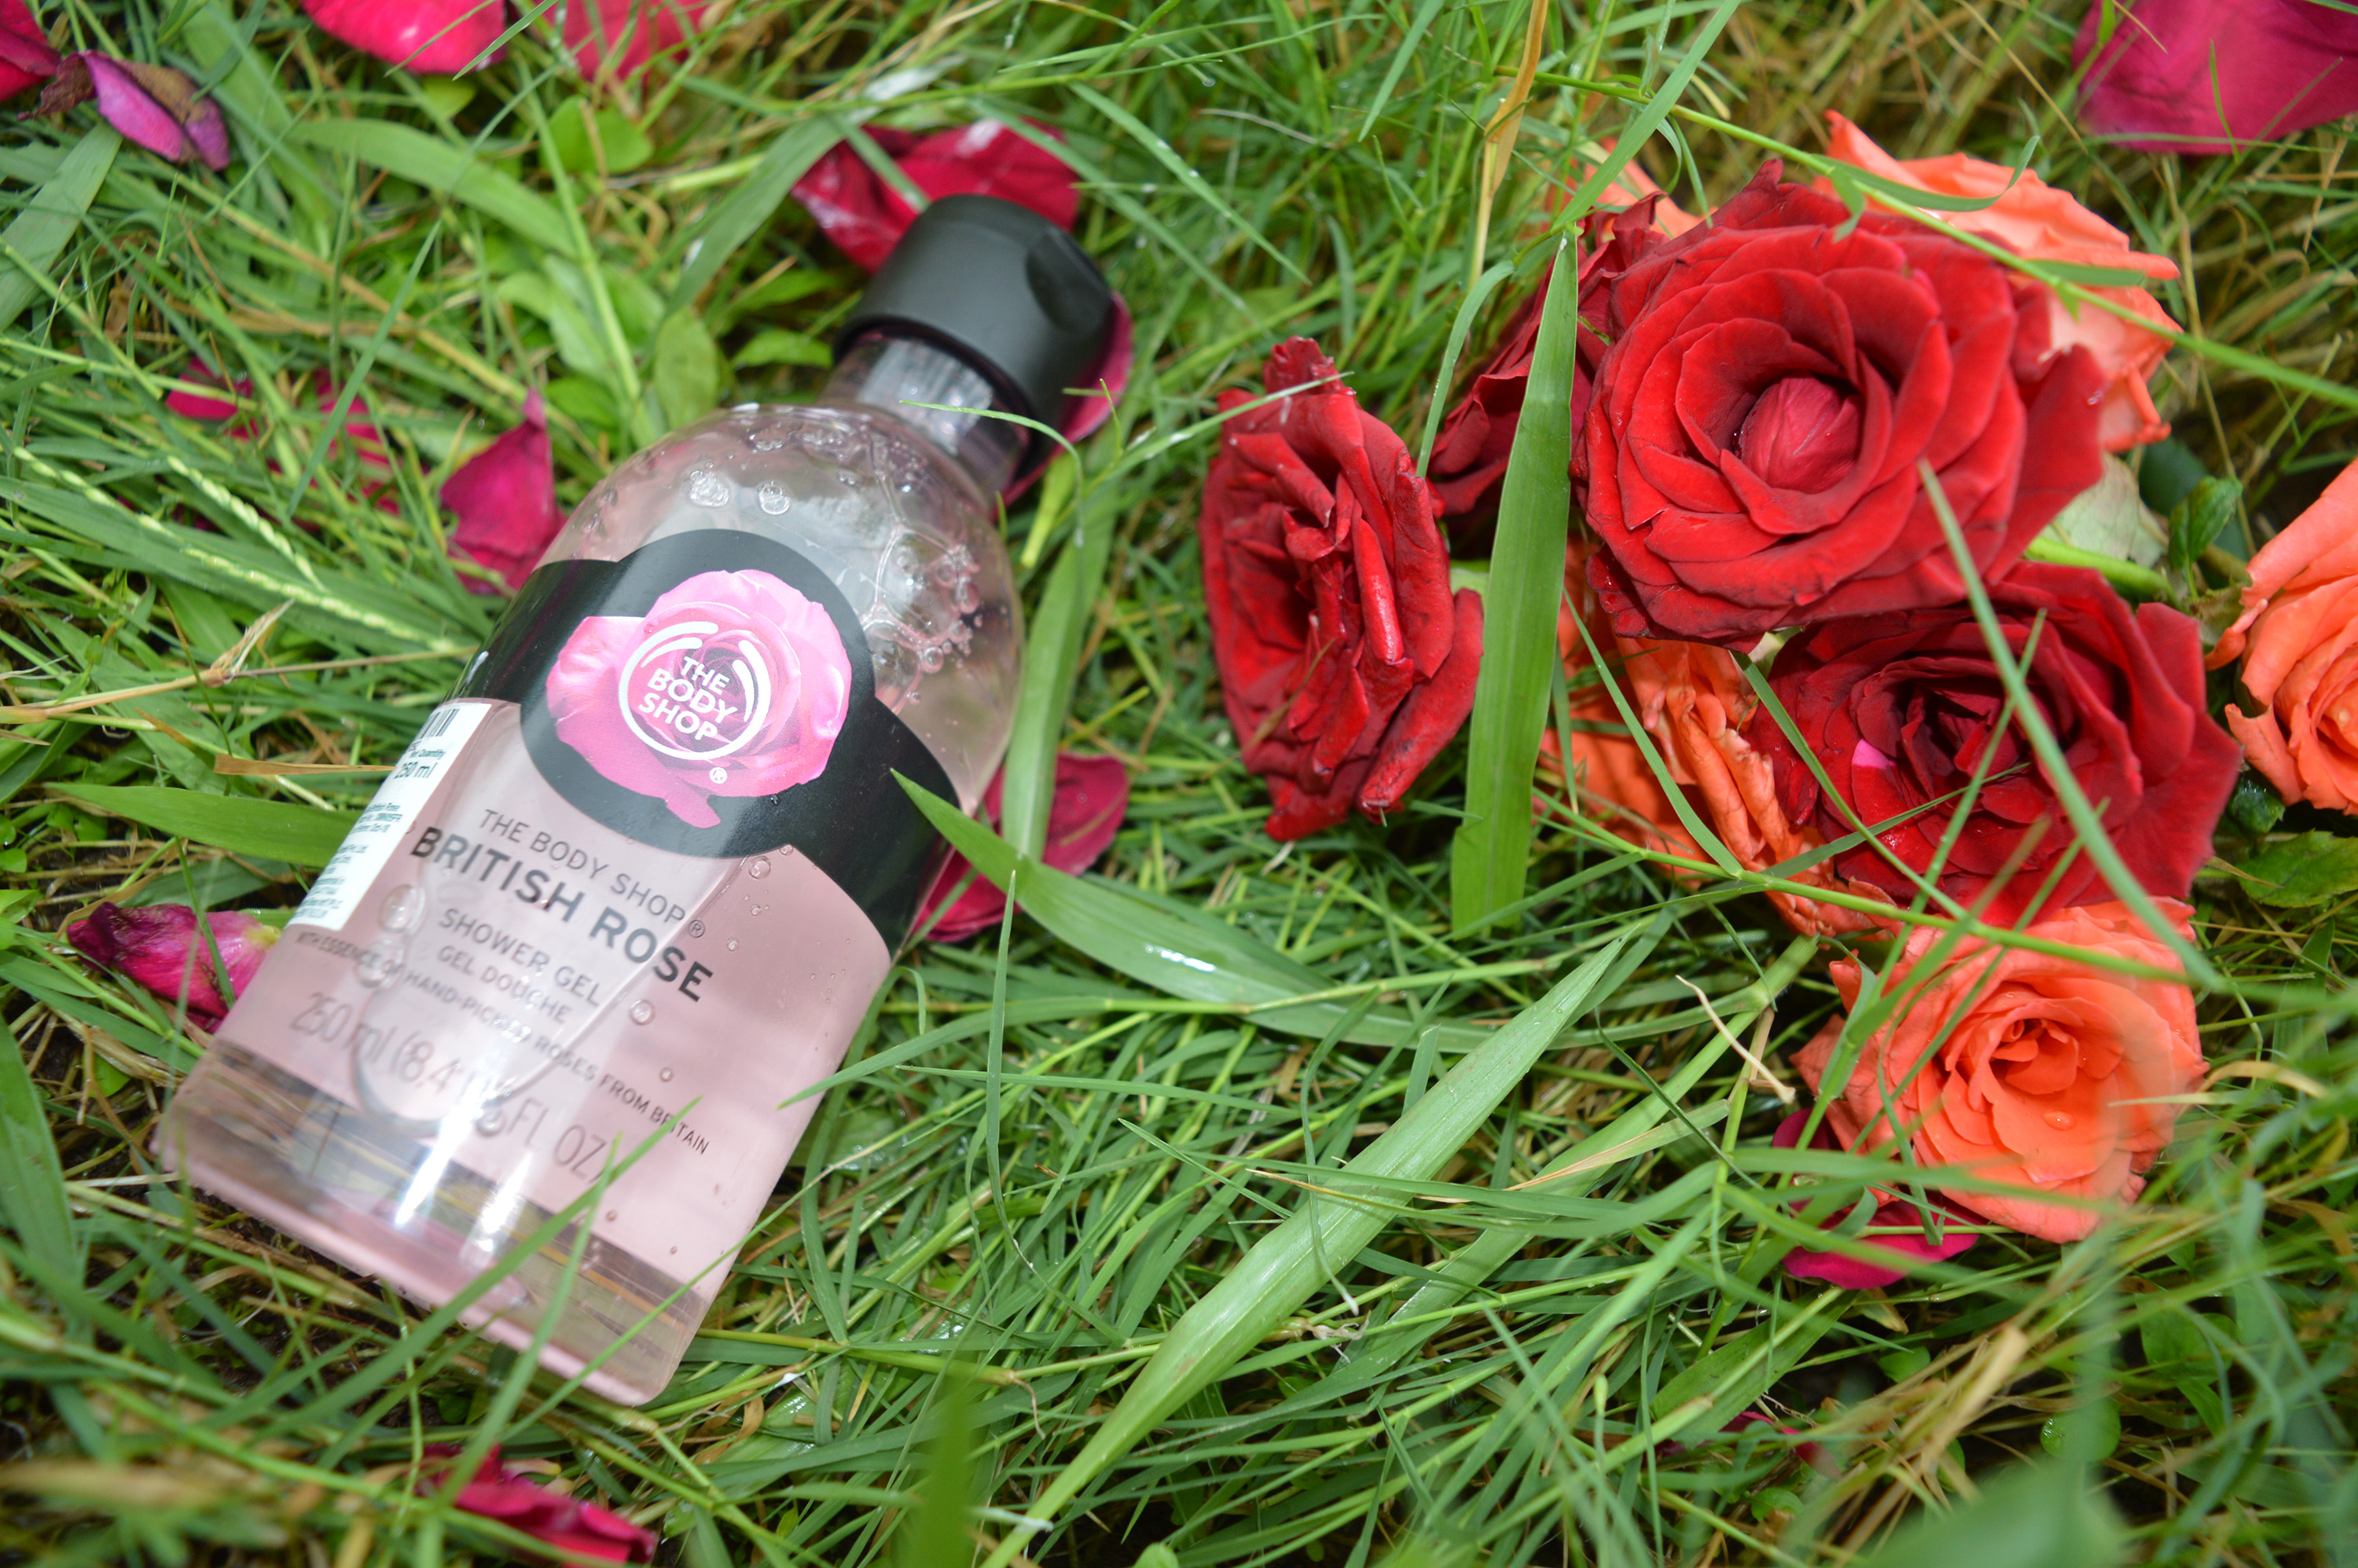 british rose shower gel